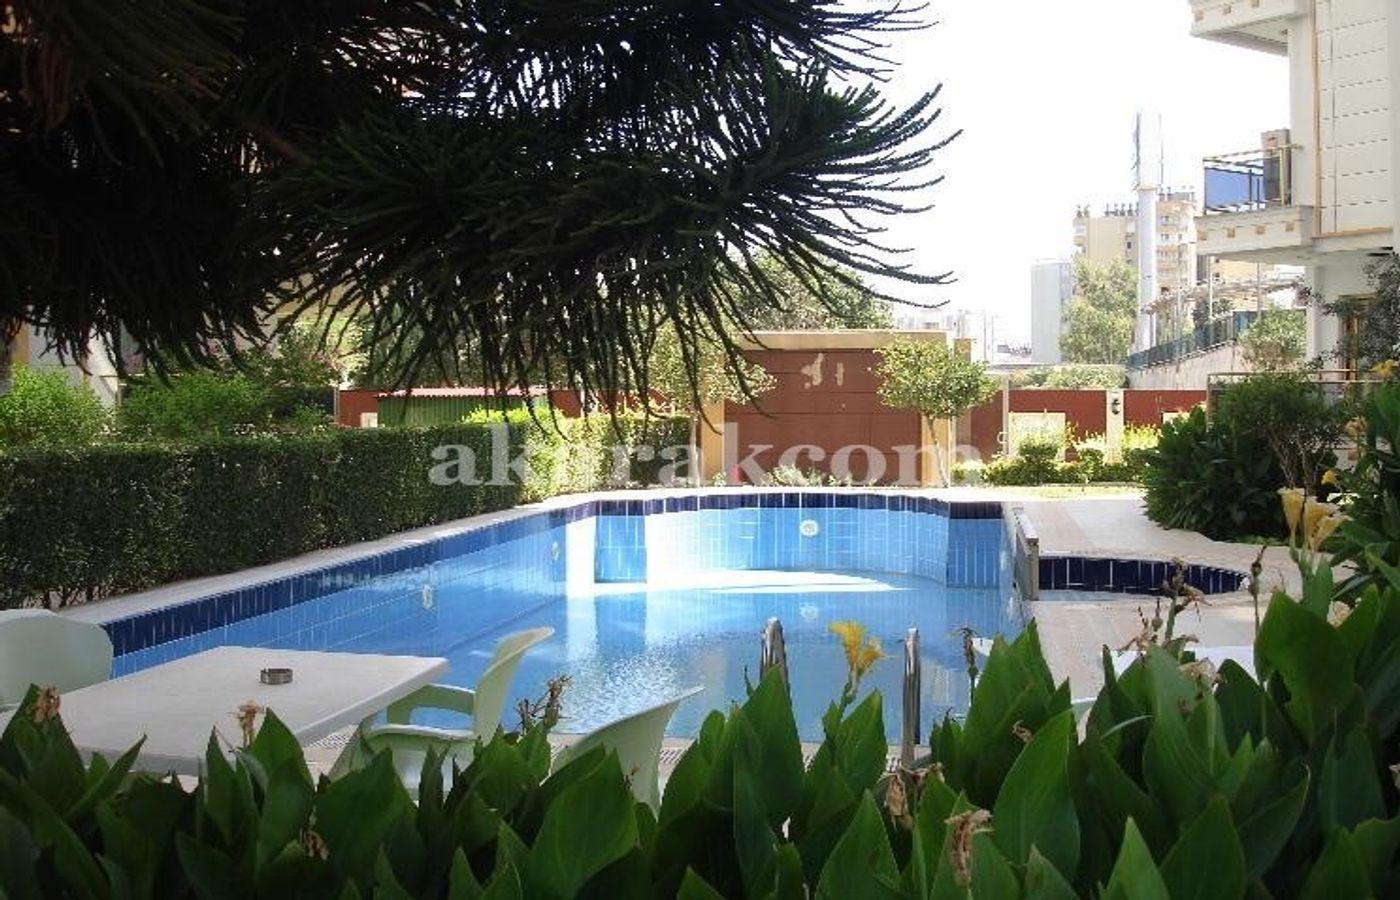 Apartment in Antalya For Sale | Antalya Property